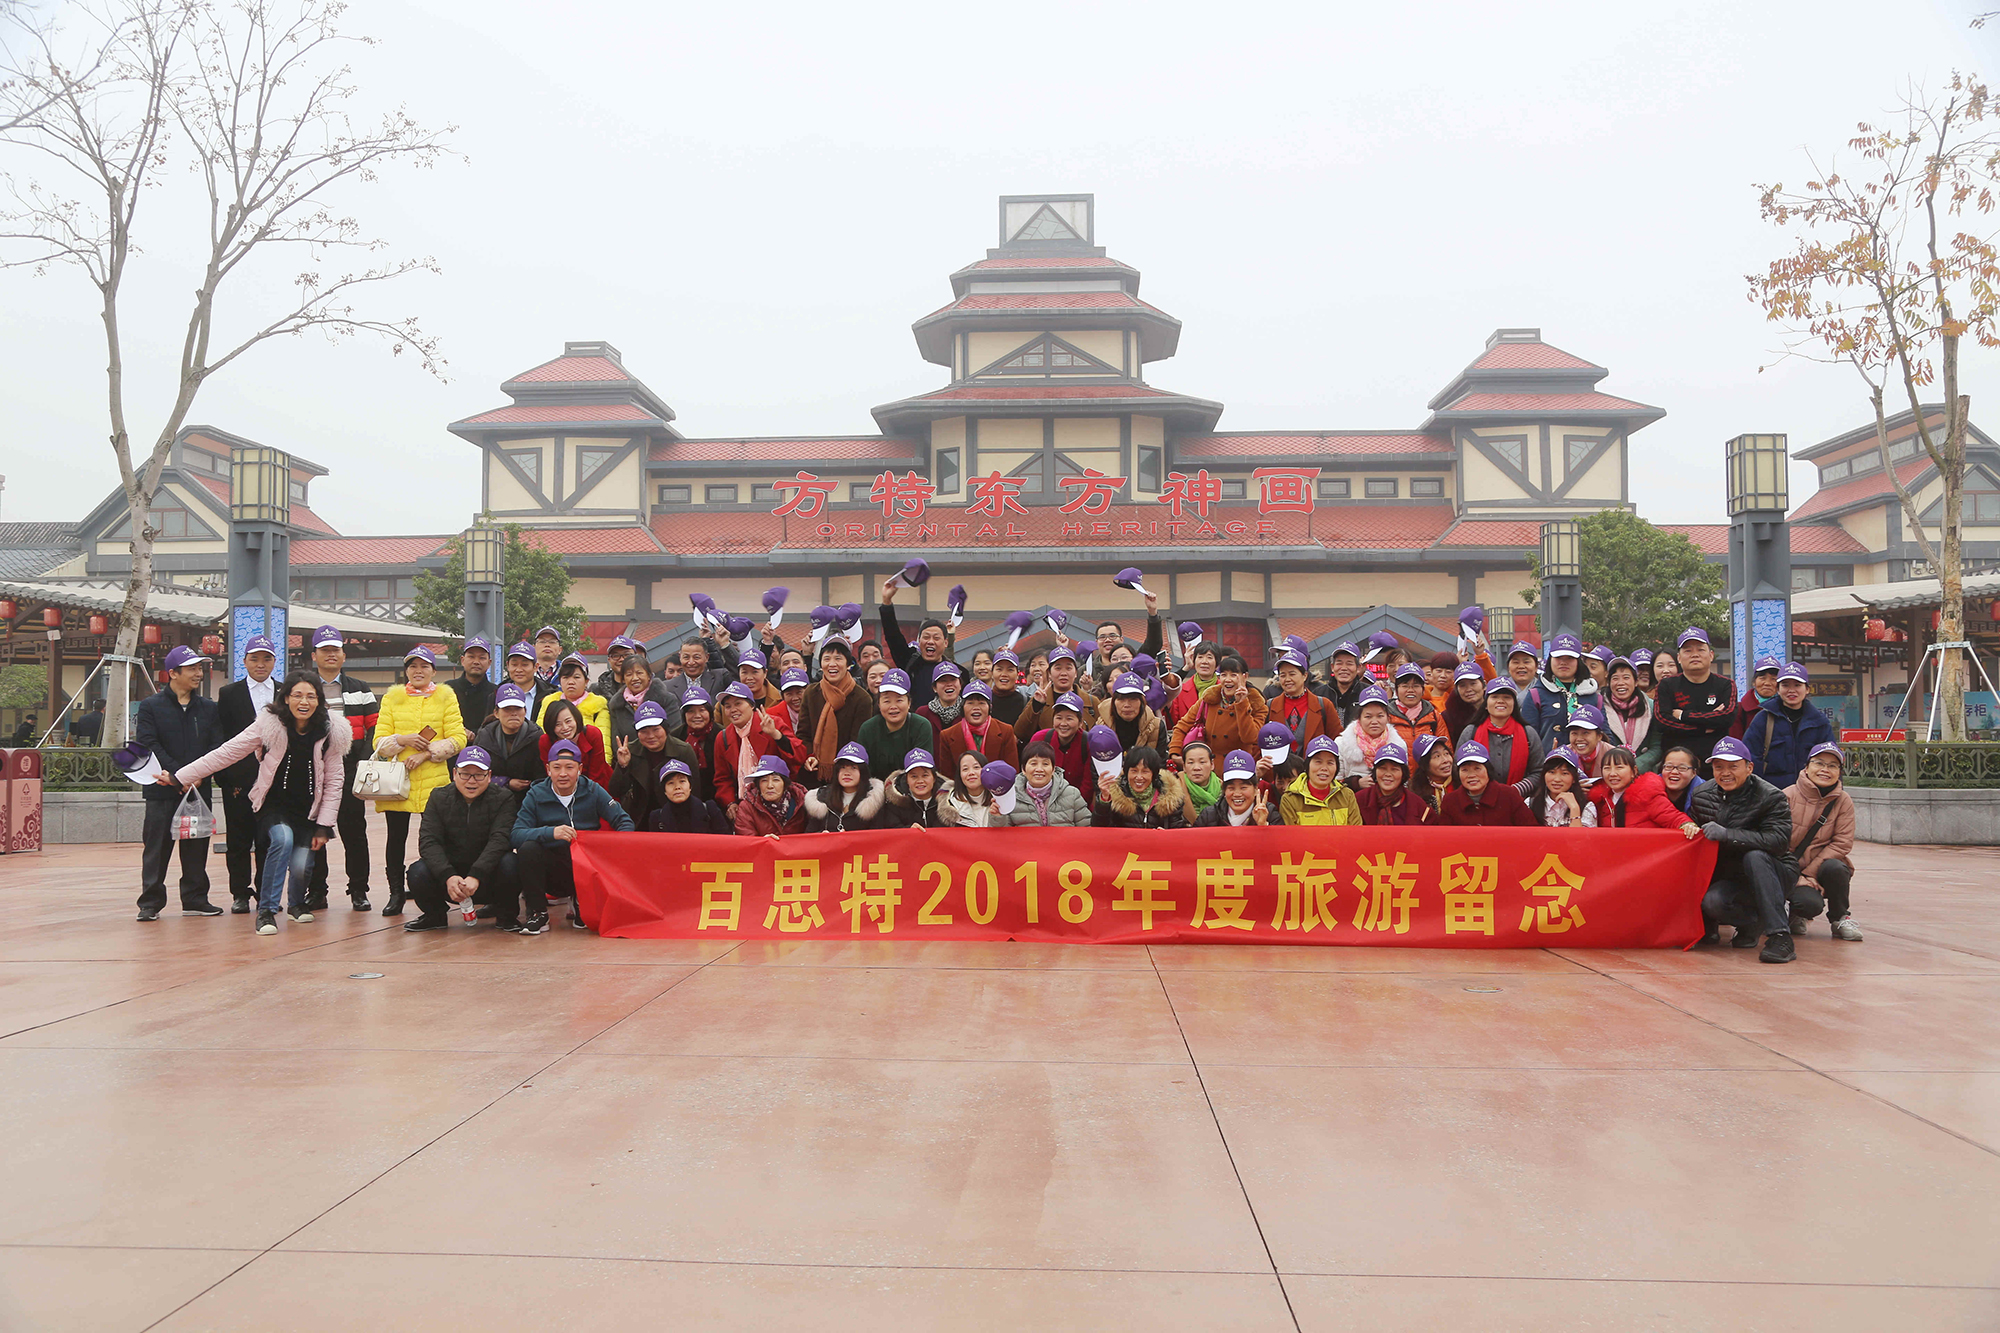 Shangyu-Best Team Building In Ningbo,Zhejiang Province (9.21)